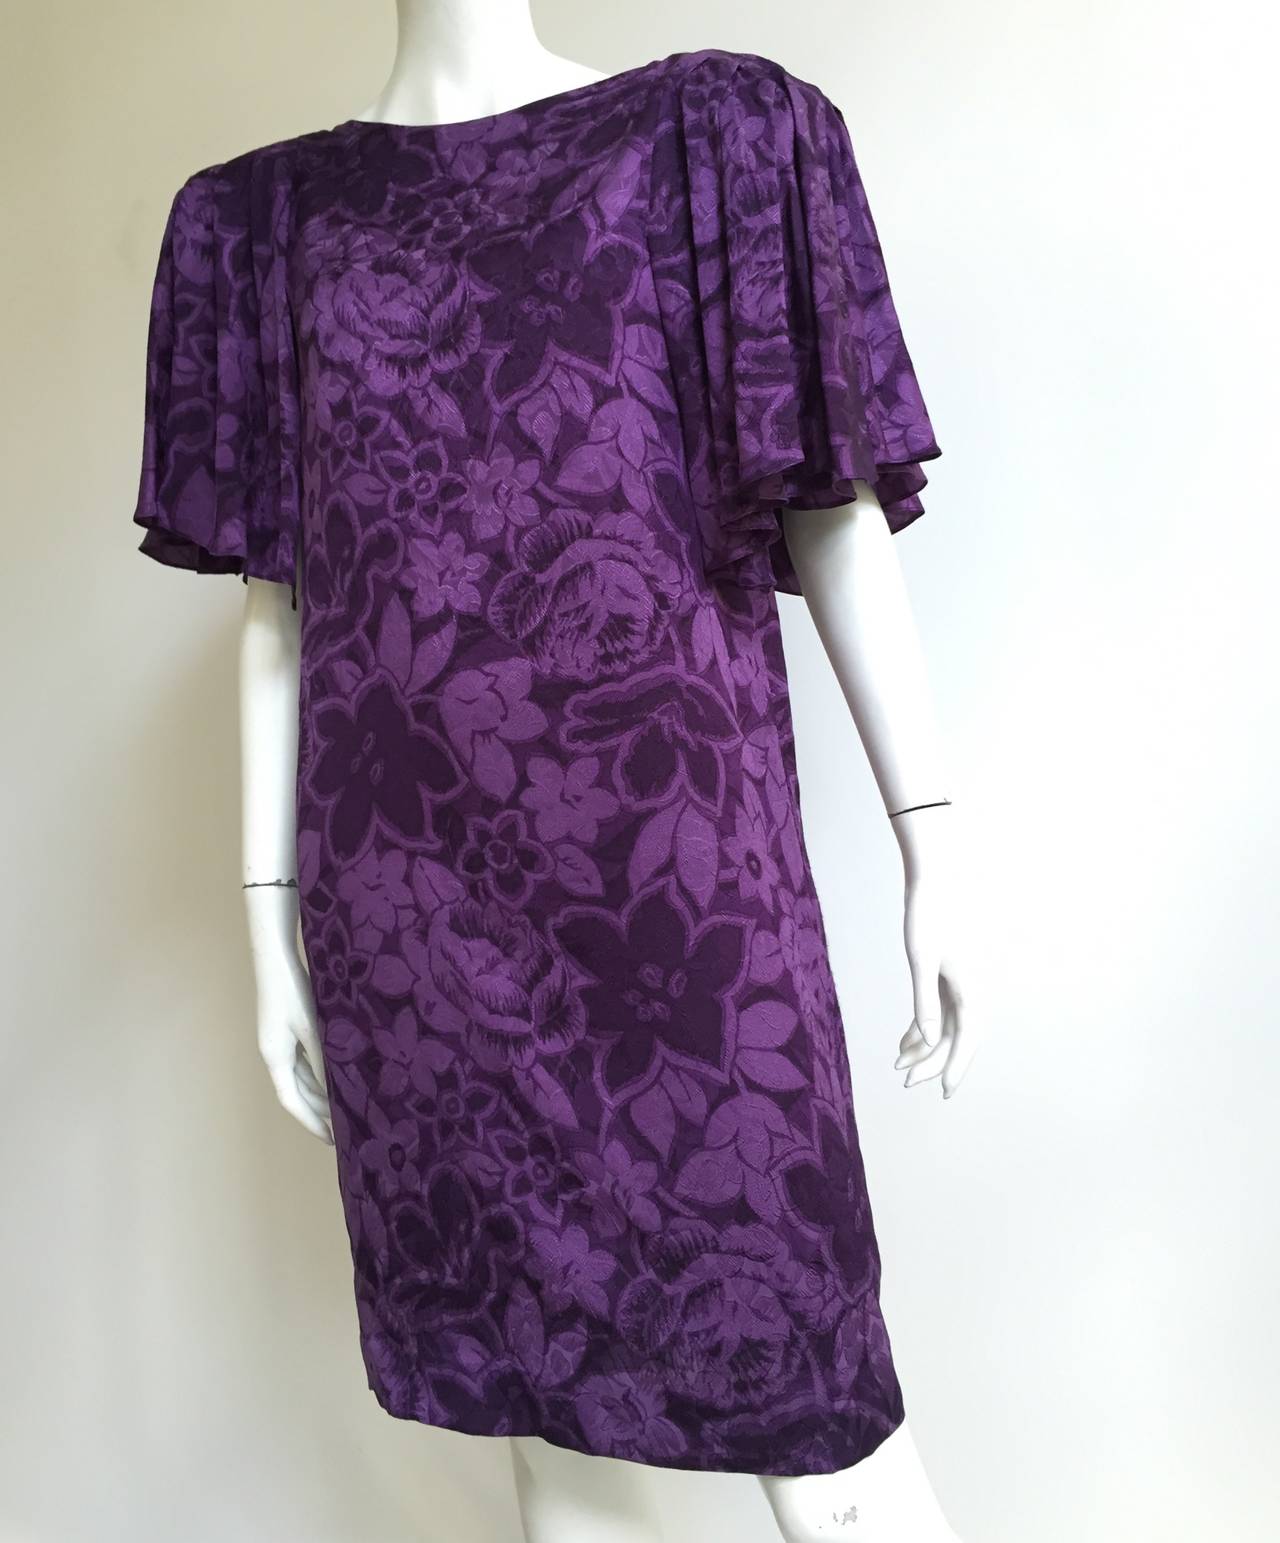 Purple Hanae Mori for Neiman Marcus 80s floral silk dress size 8. For Sale